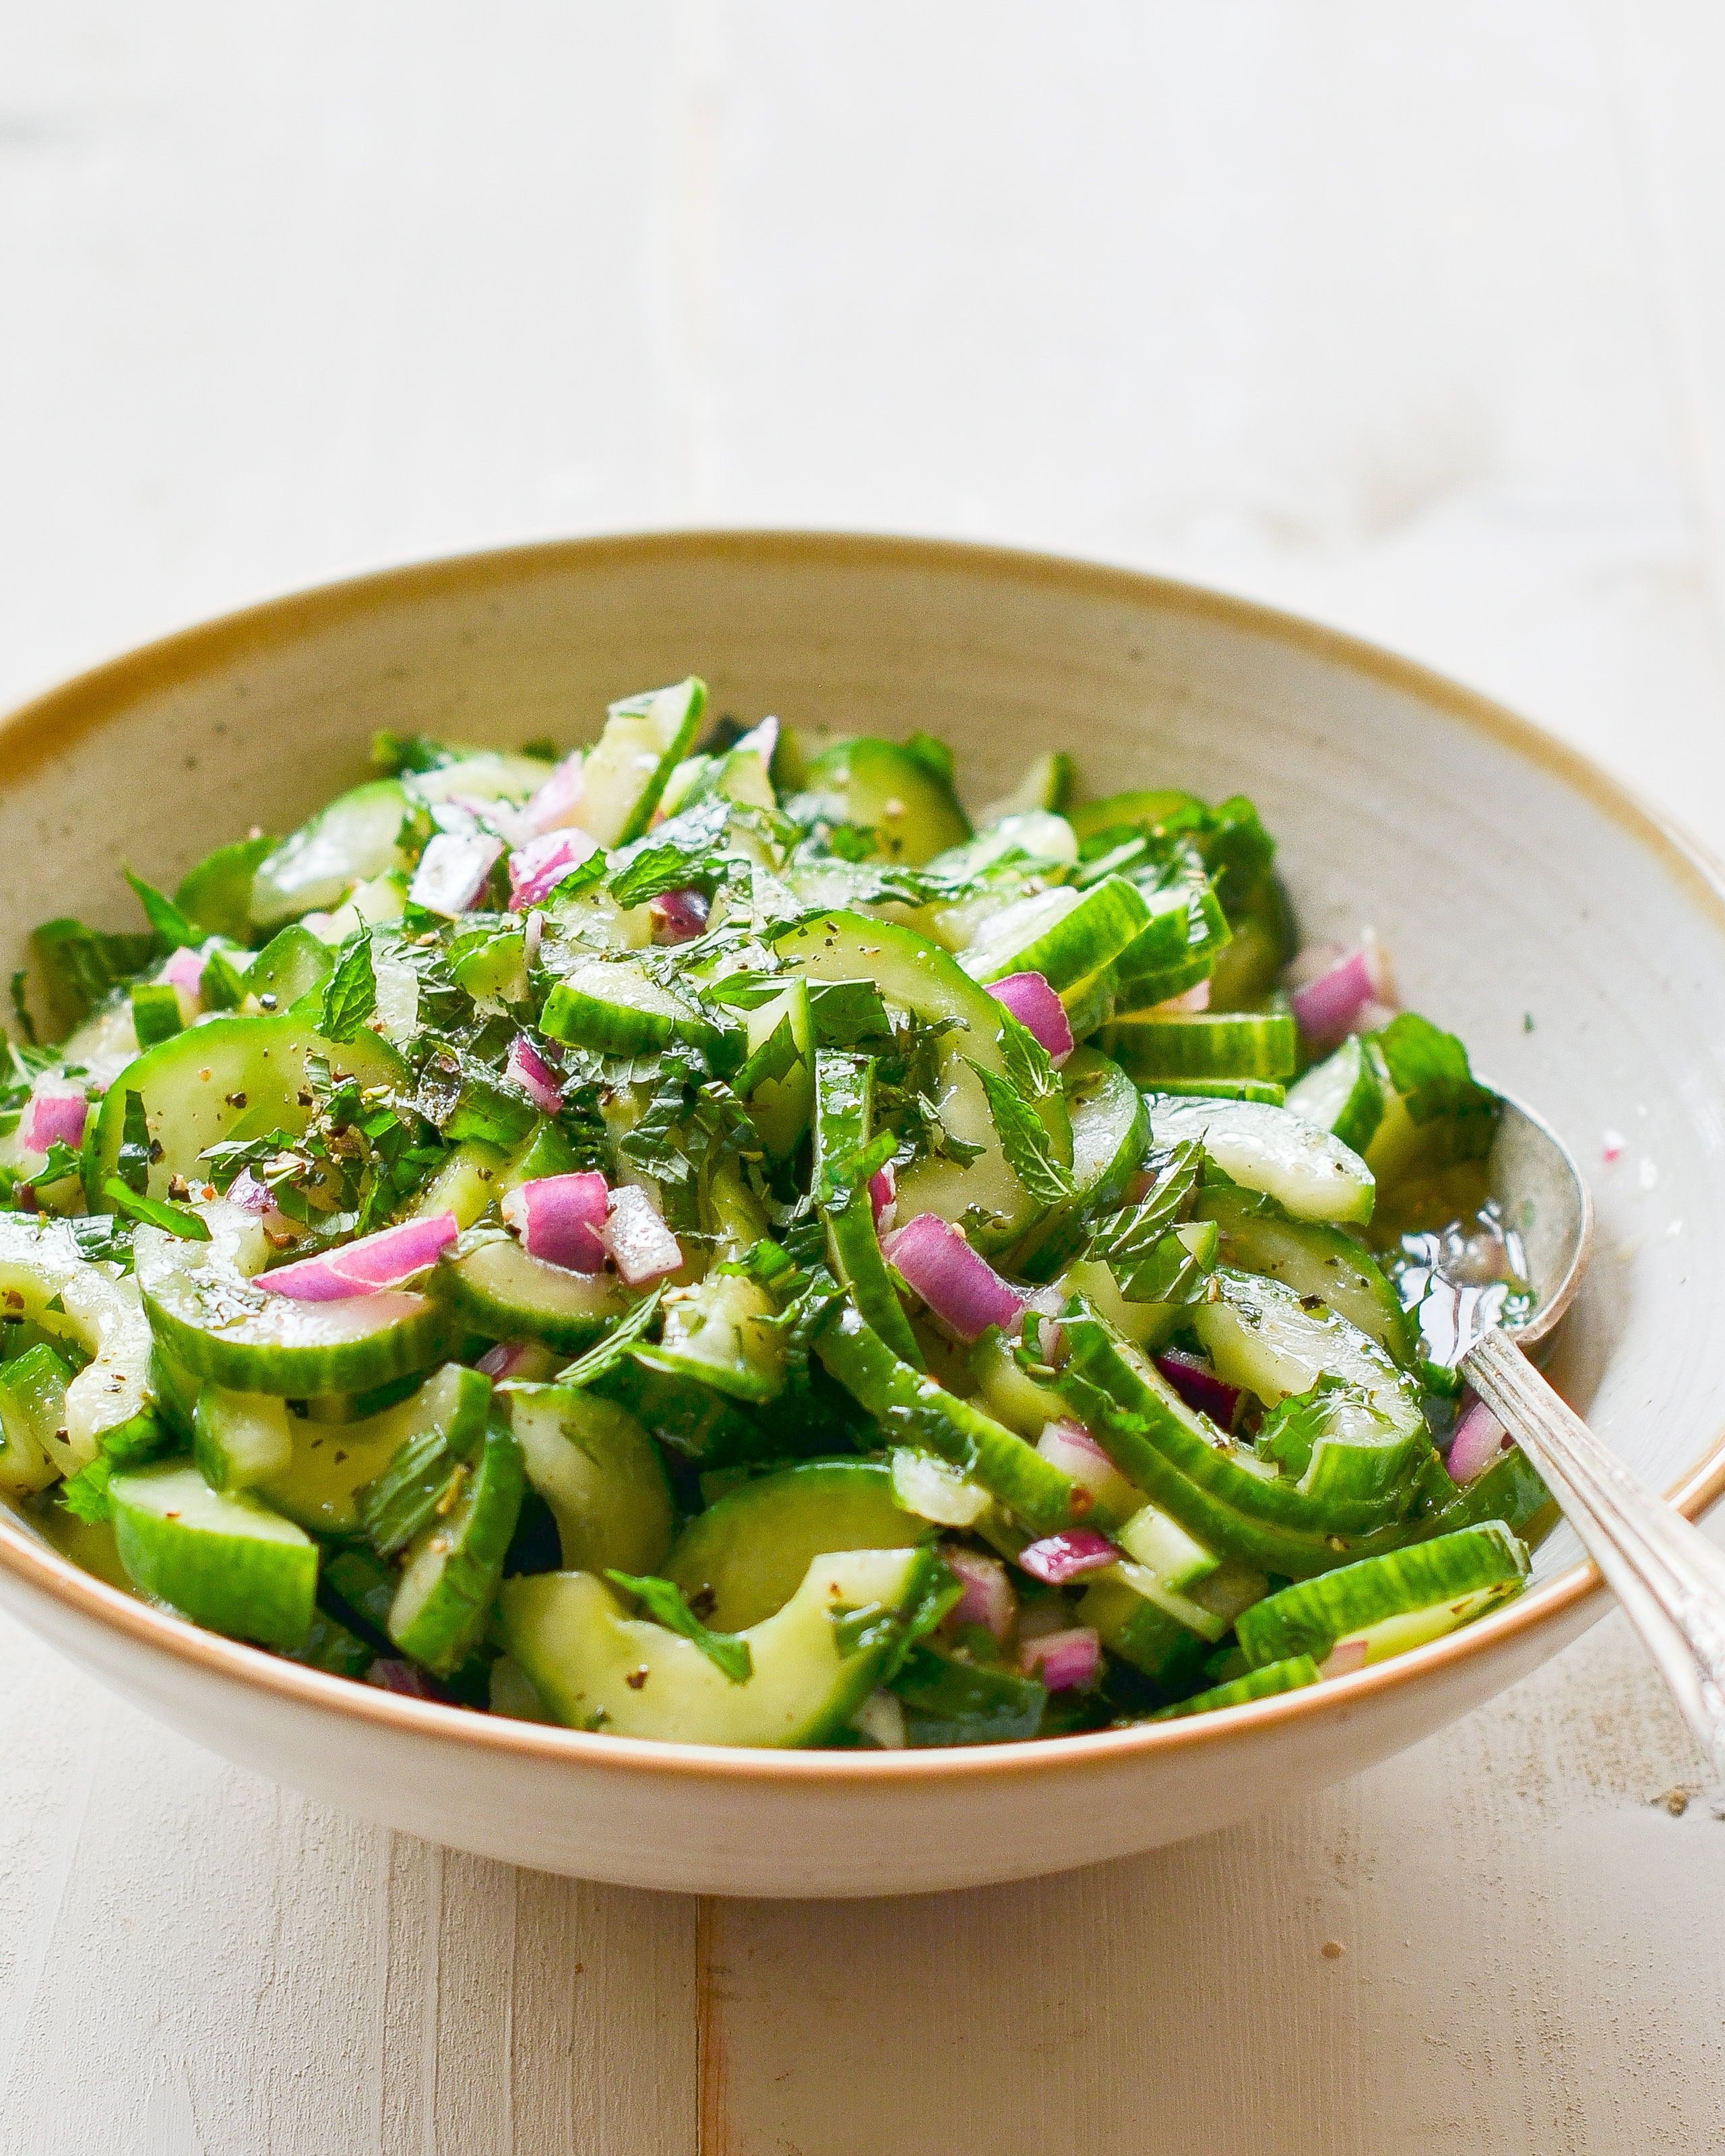 Green Salad Recipe for Beginners  Green salad recipes, Delicious